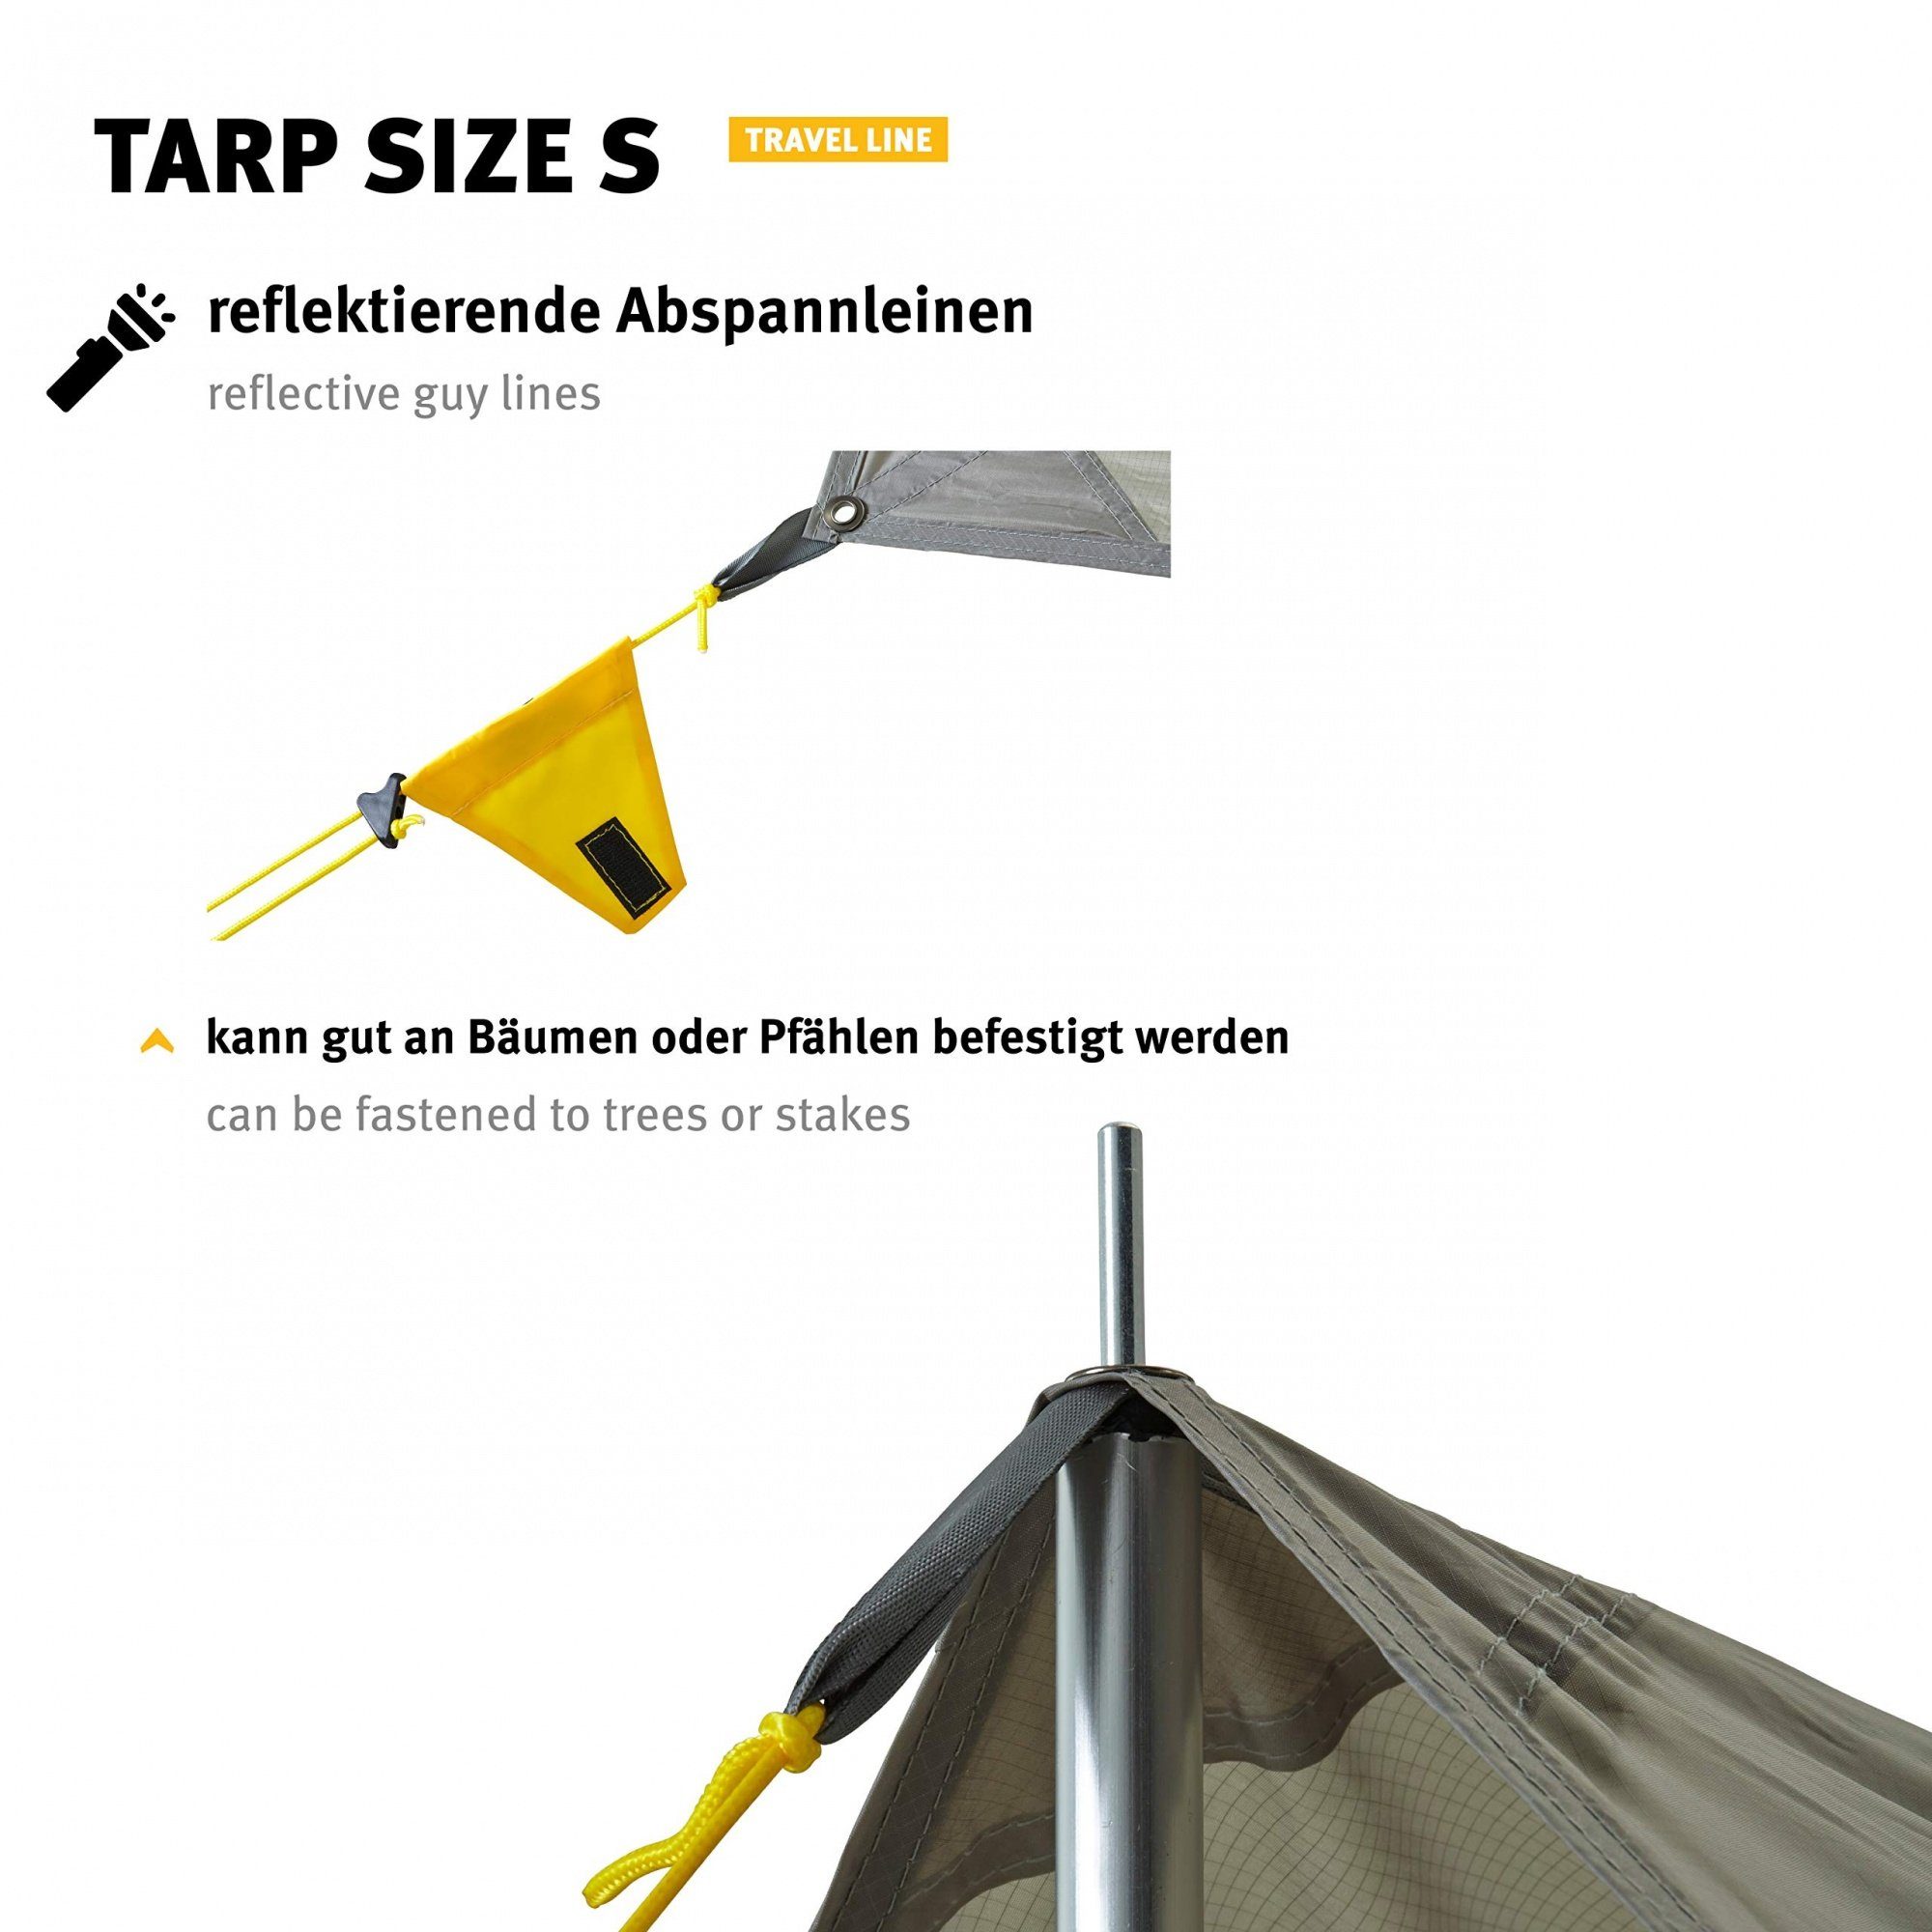 Wechsel Tents Tarp-Zelt Zeltdach, - 400 Travel Line S - Universal cm 290 Tarp X